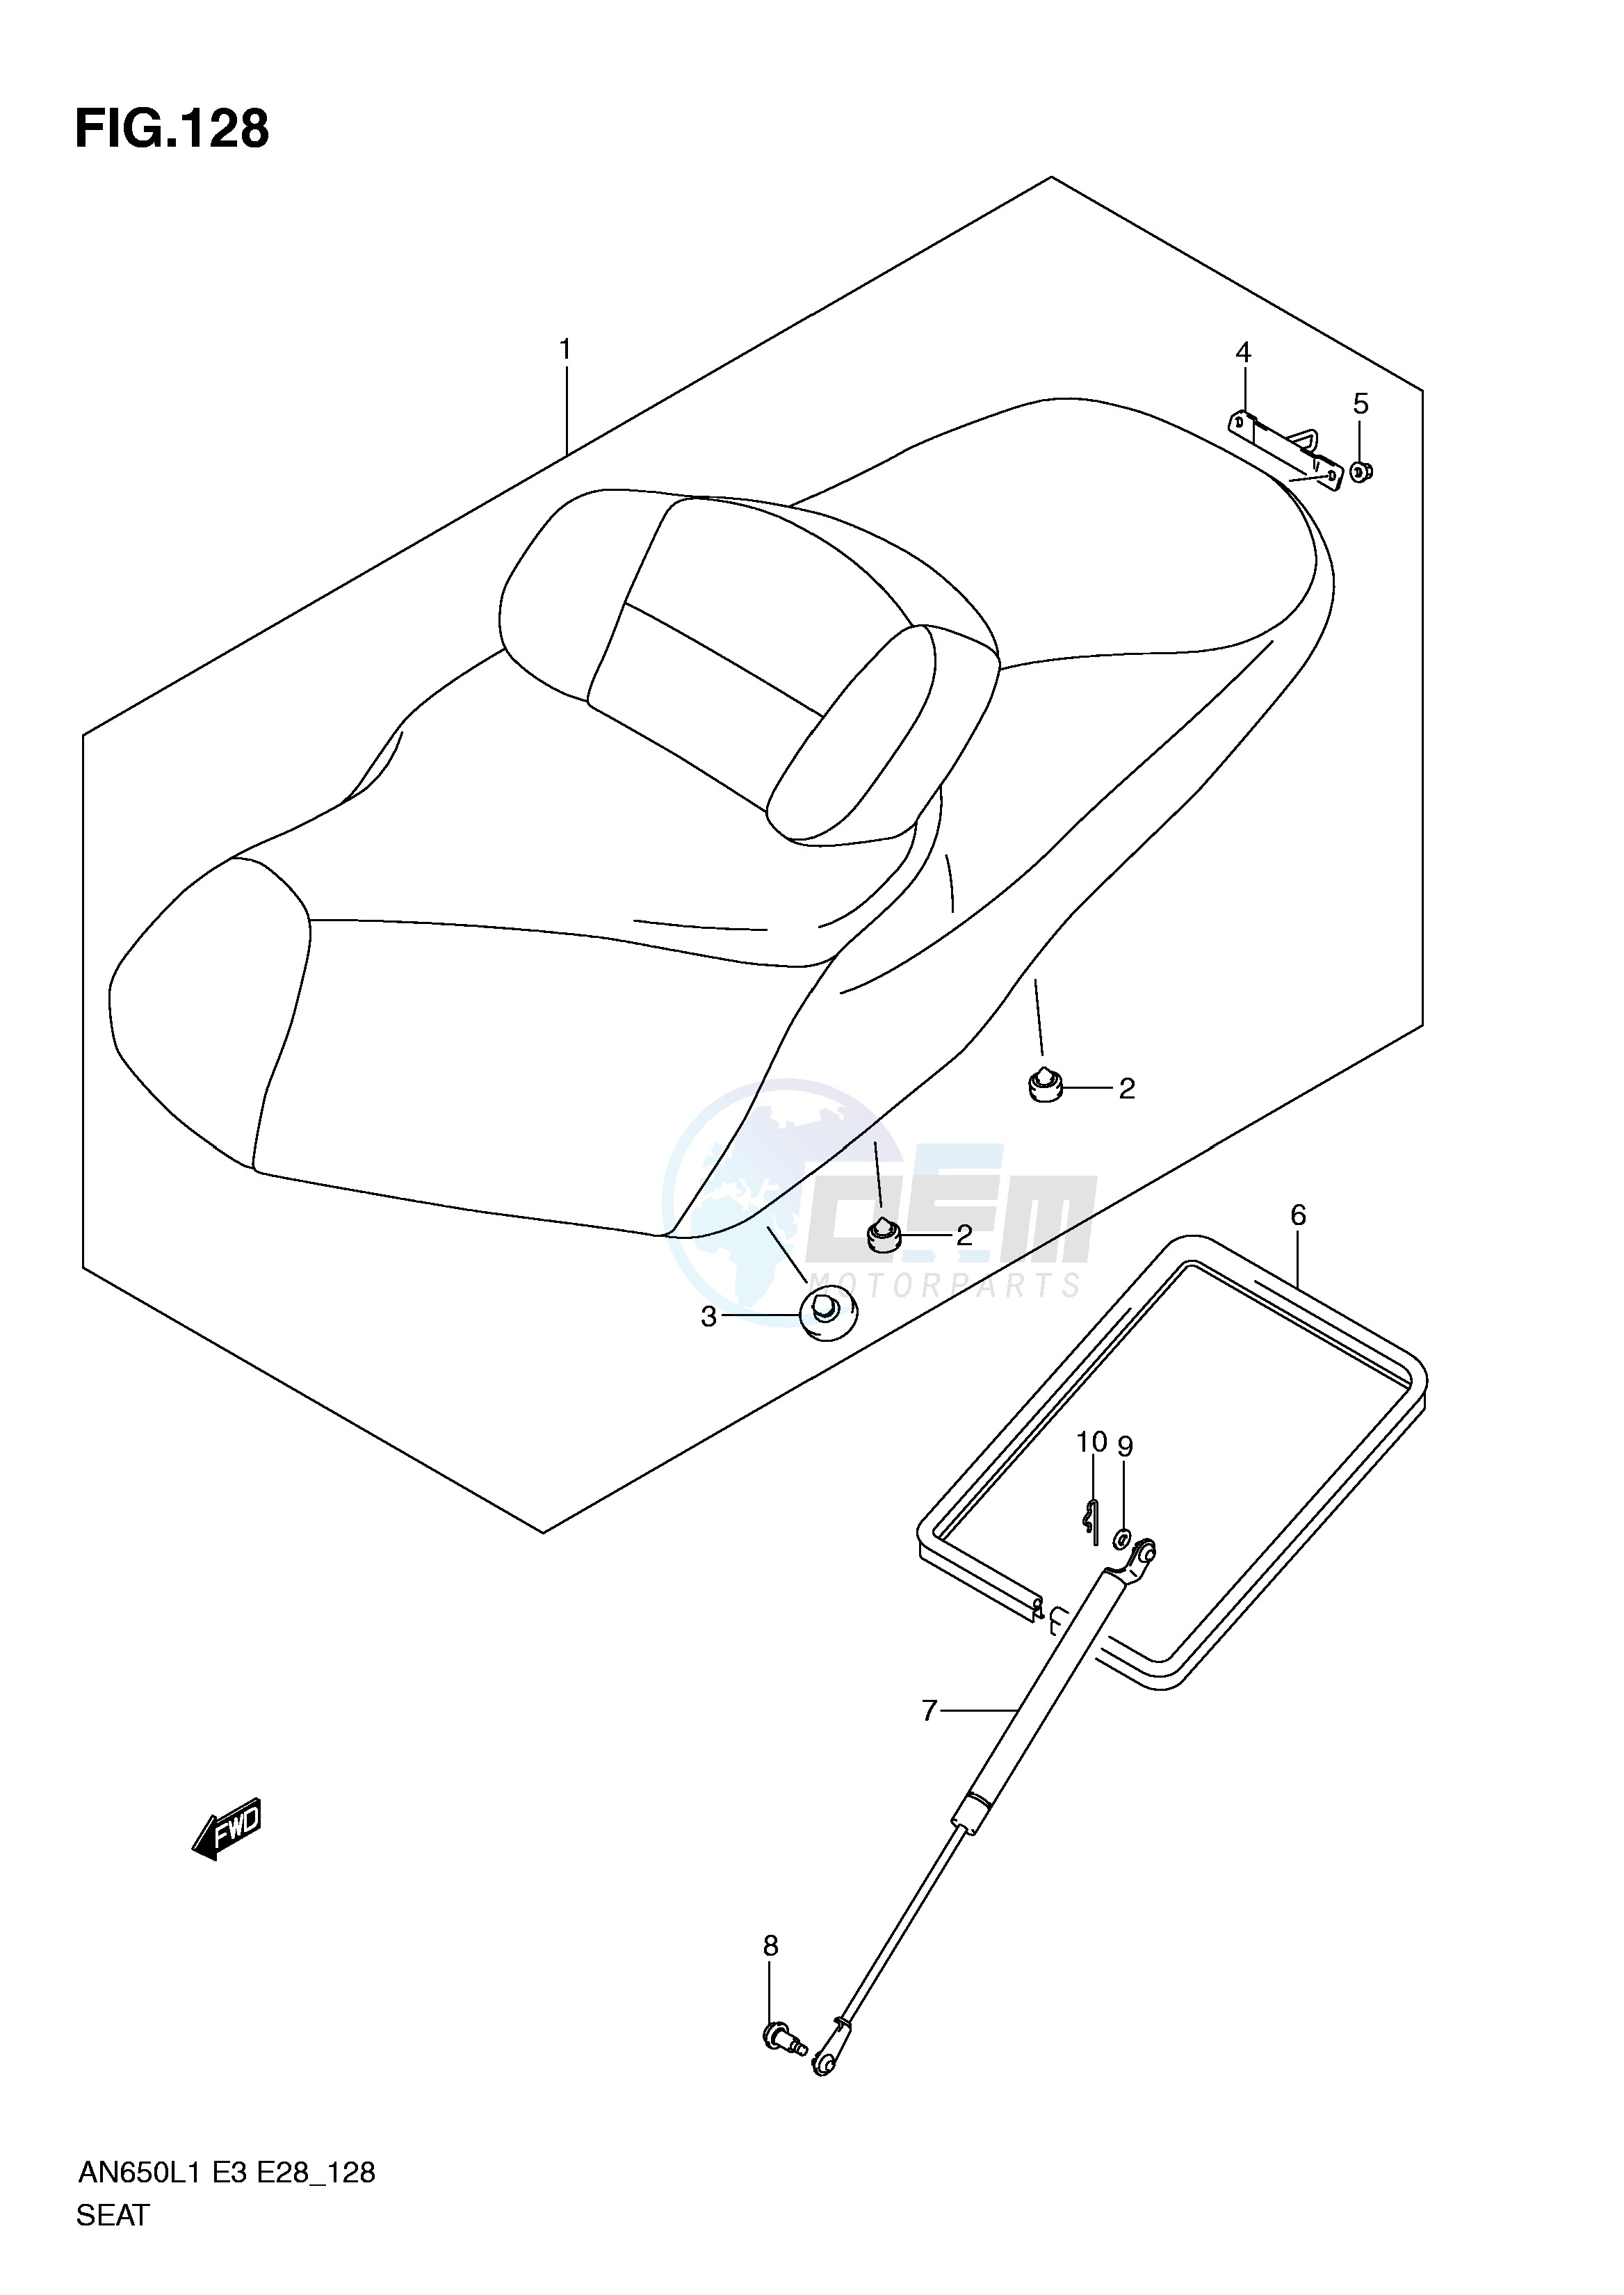 SEAT (AN650AL1 E33) blueprint